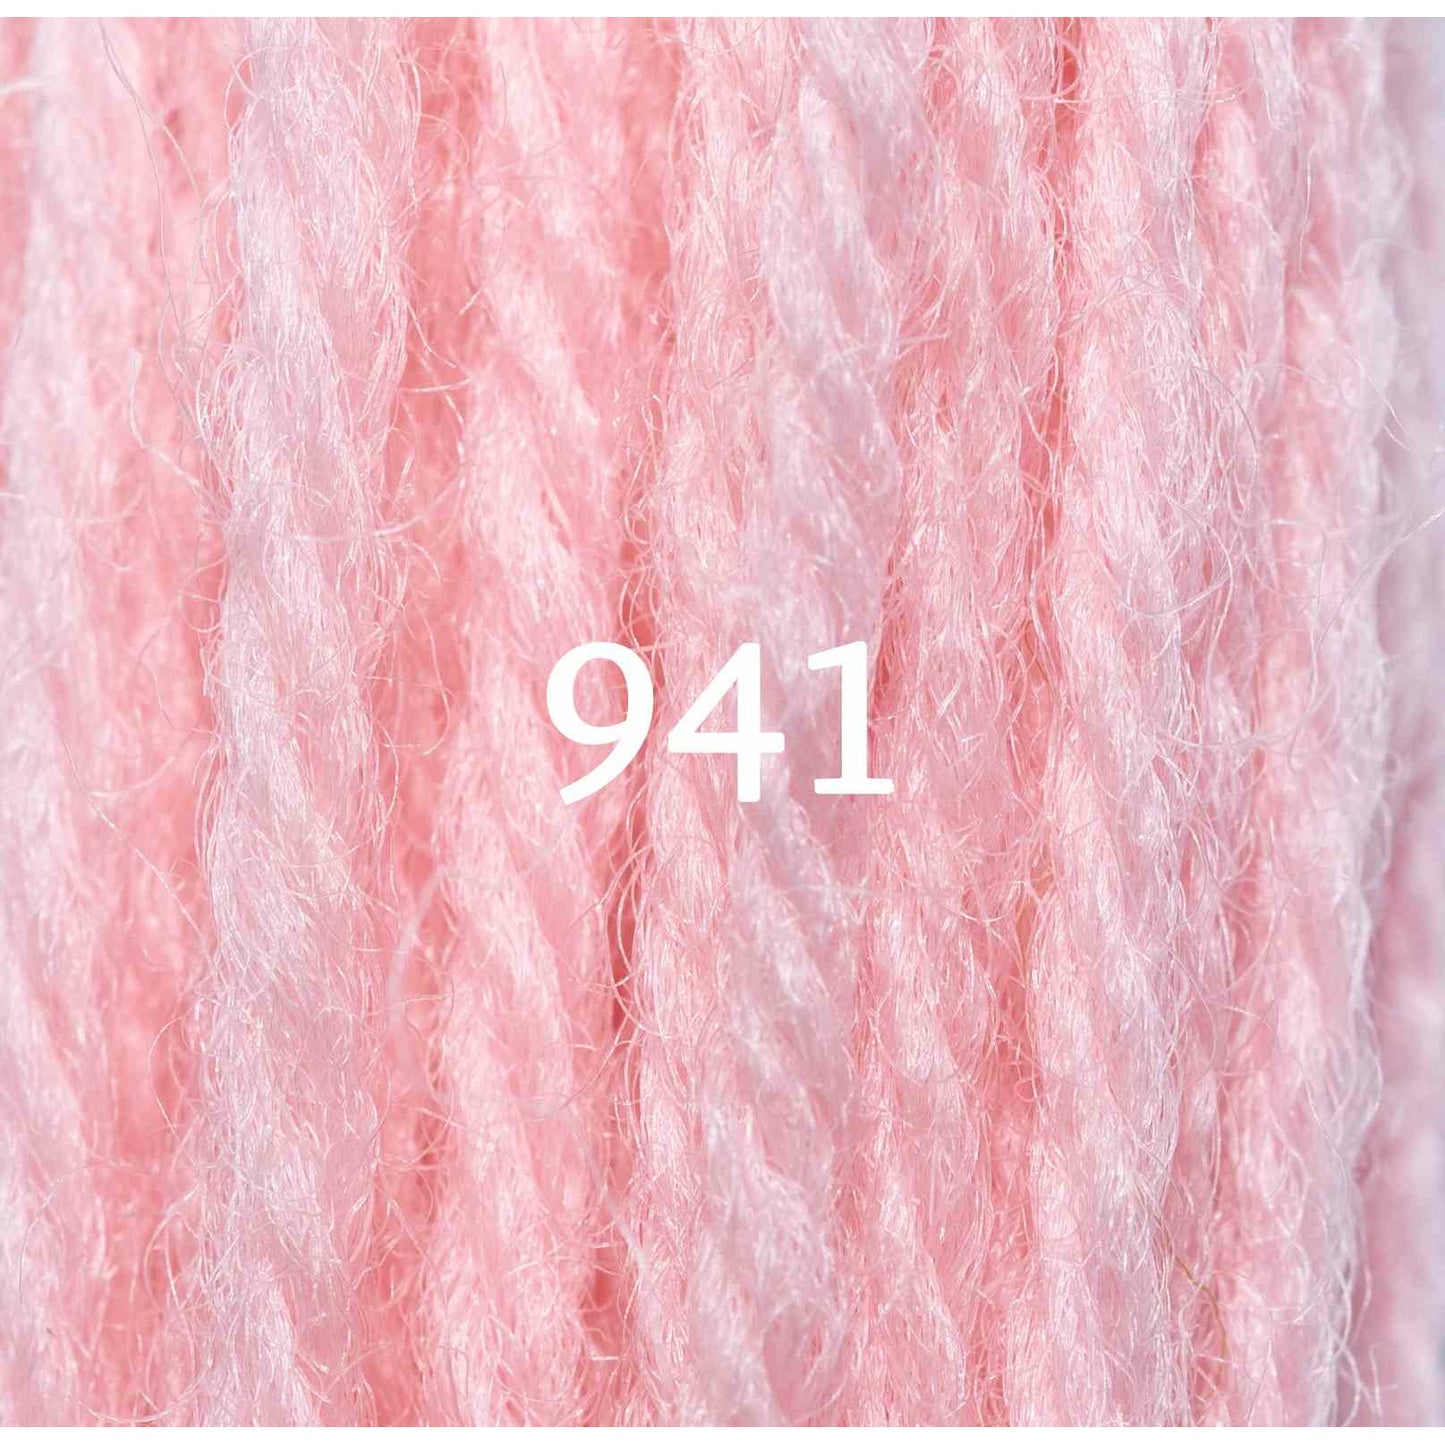 Crewel Weight Yarn ~ Bright Rose Pink 941